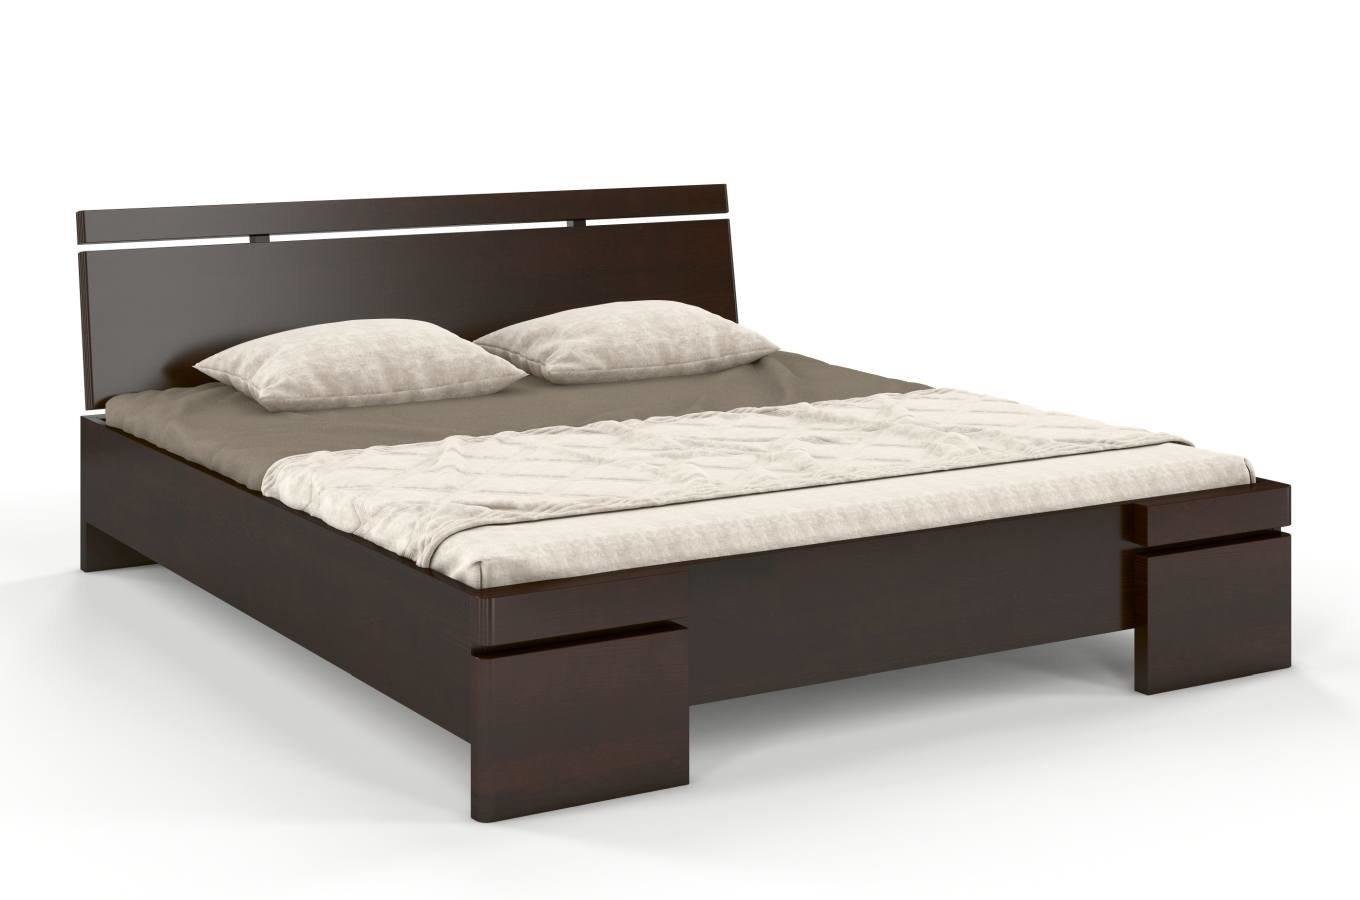 Łóżko drewniane sosnowe Skandica SPARTA Maxi & Long / 180x220 cm, kolor palisander